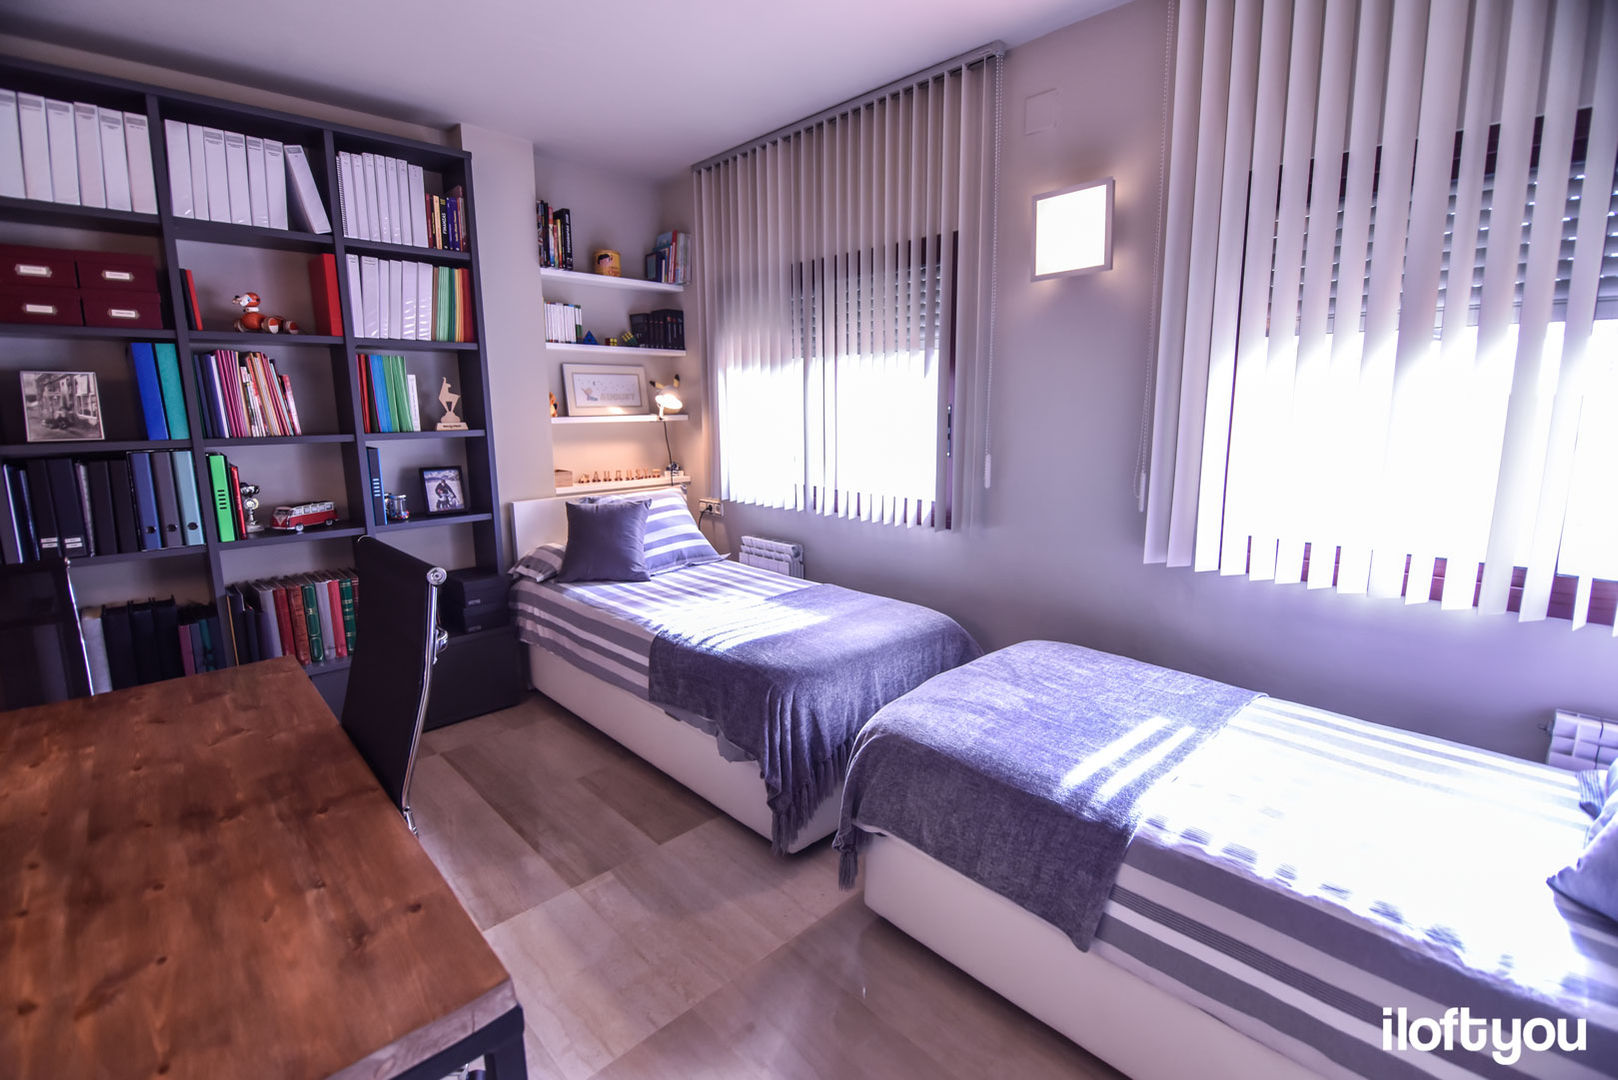 Dormitorio juvenil en Badalona, iloftyou iloftyou Modern style bedroom